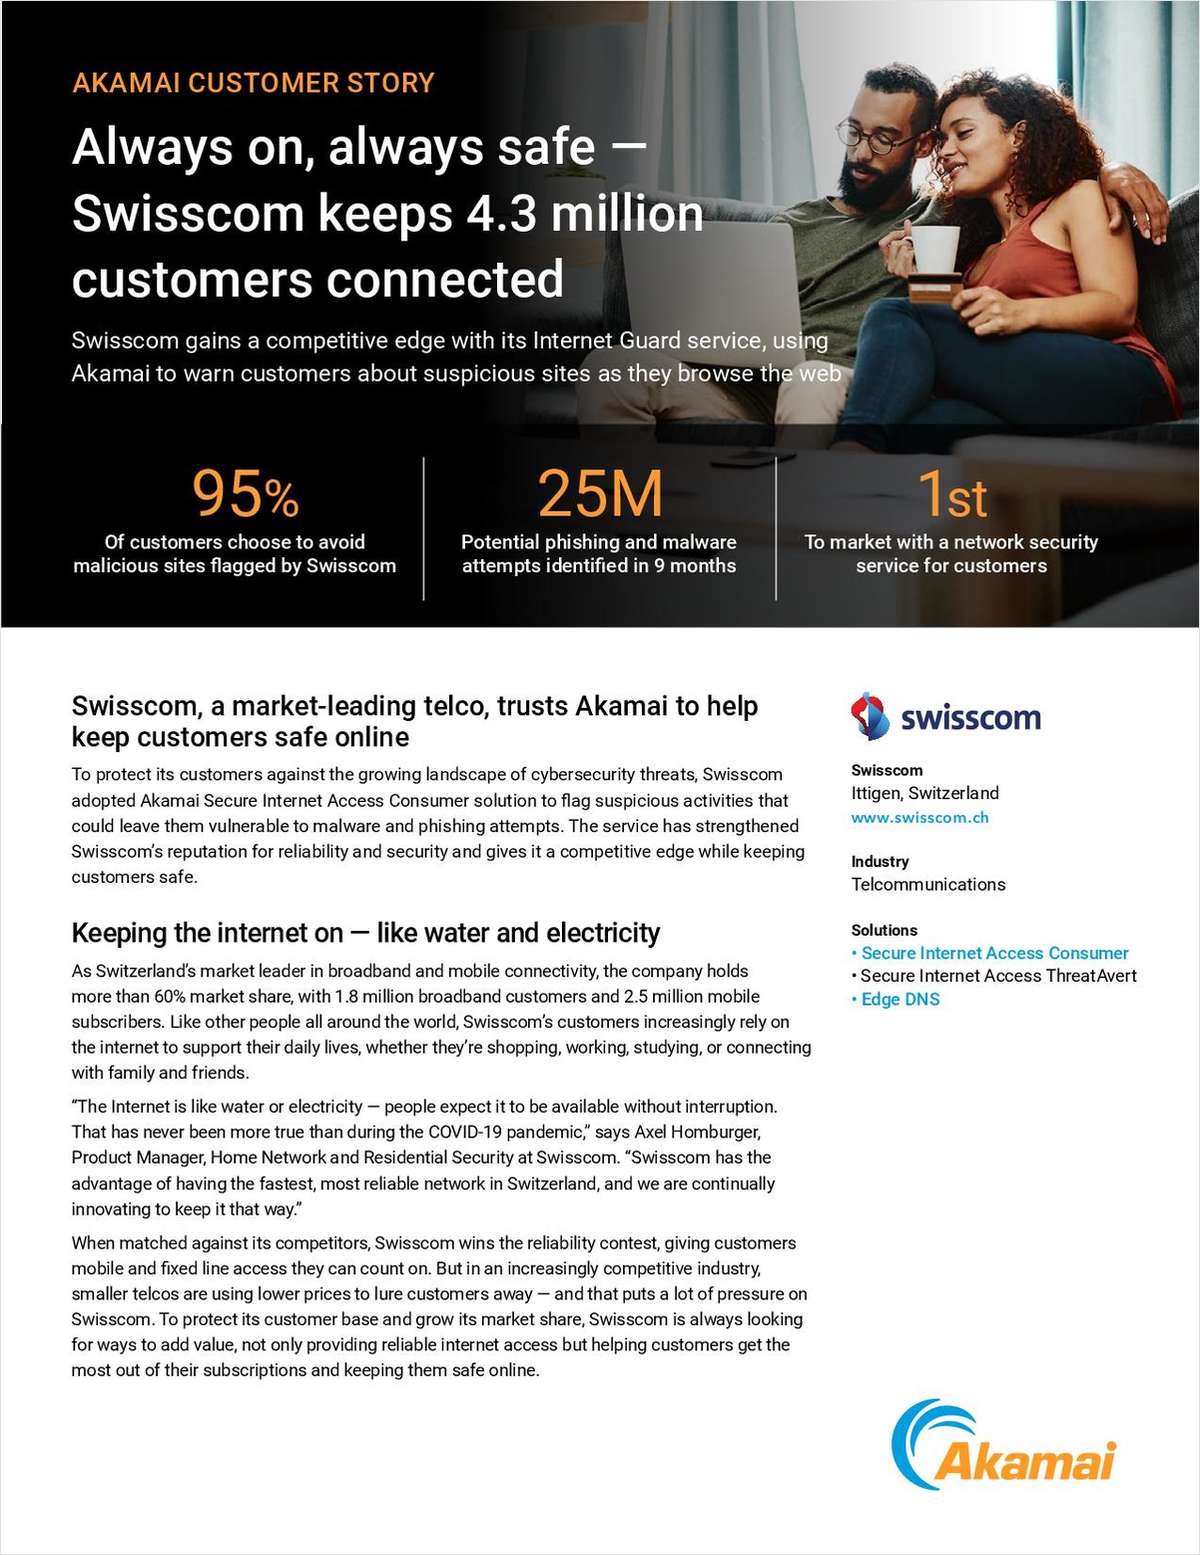 Akamai Customer Story -- Swisscom